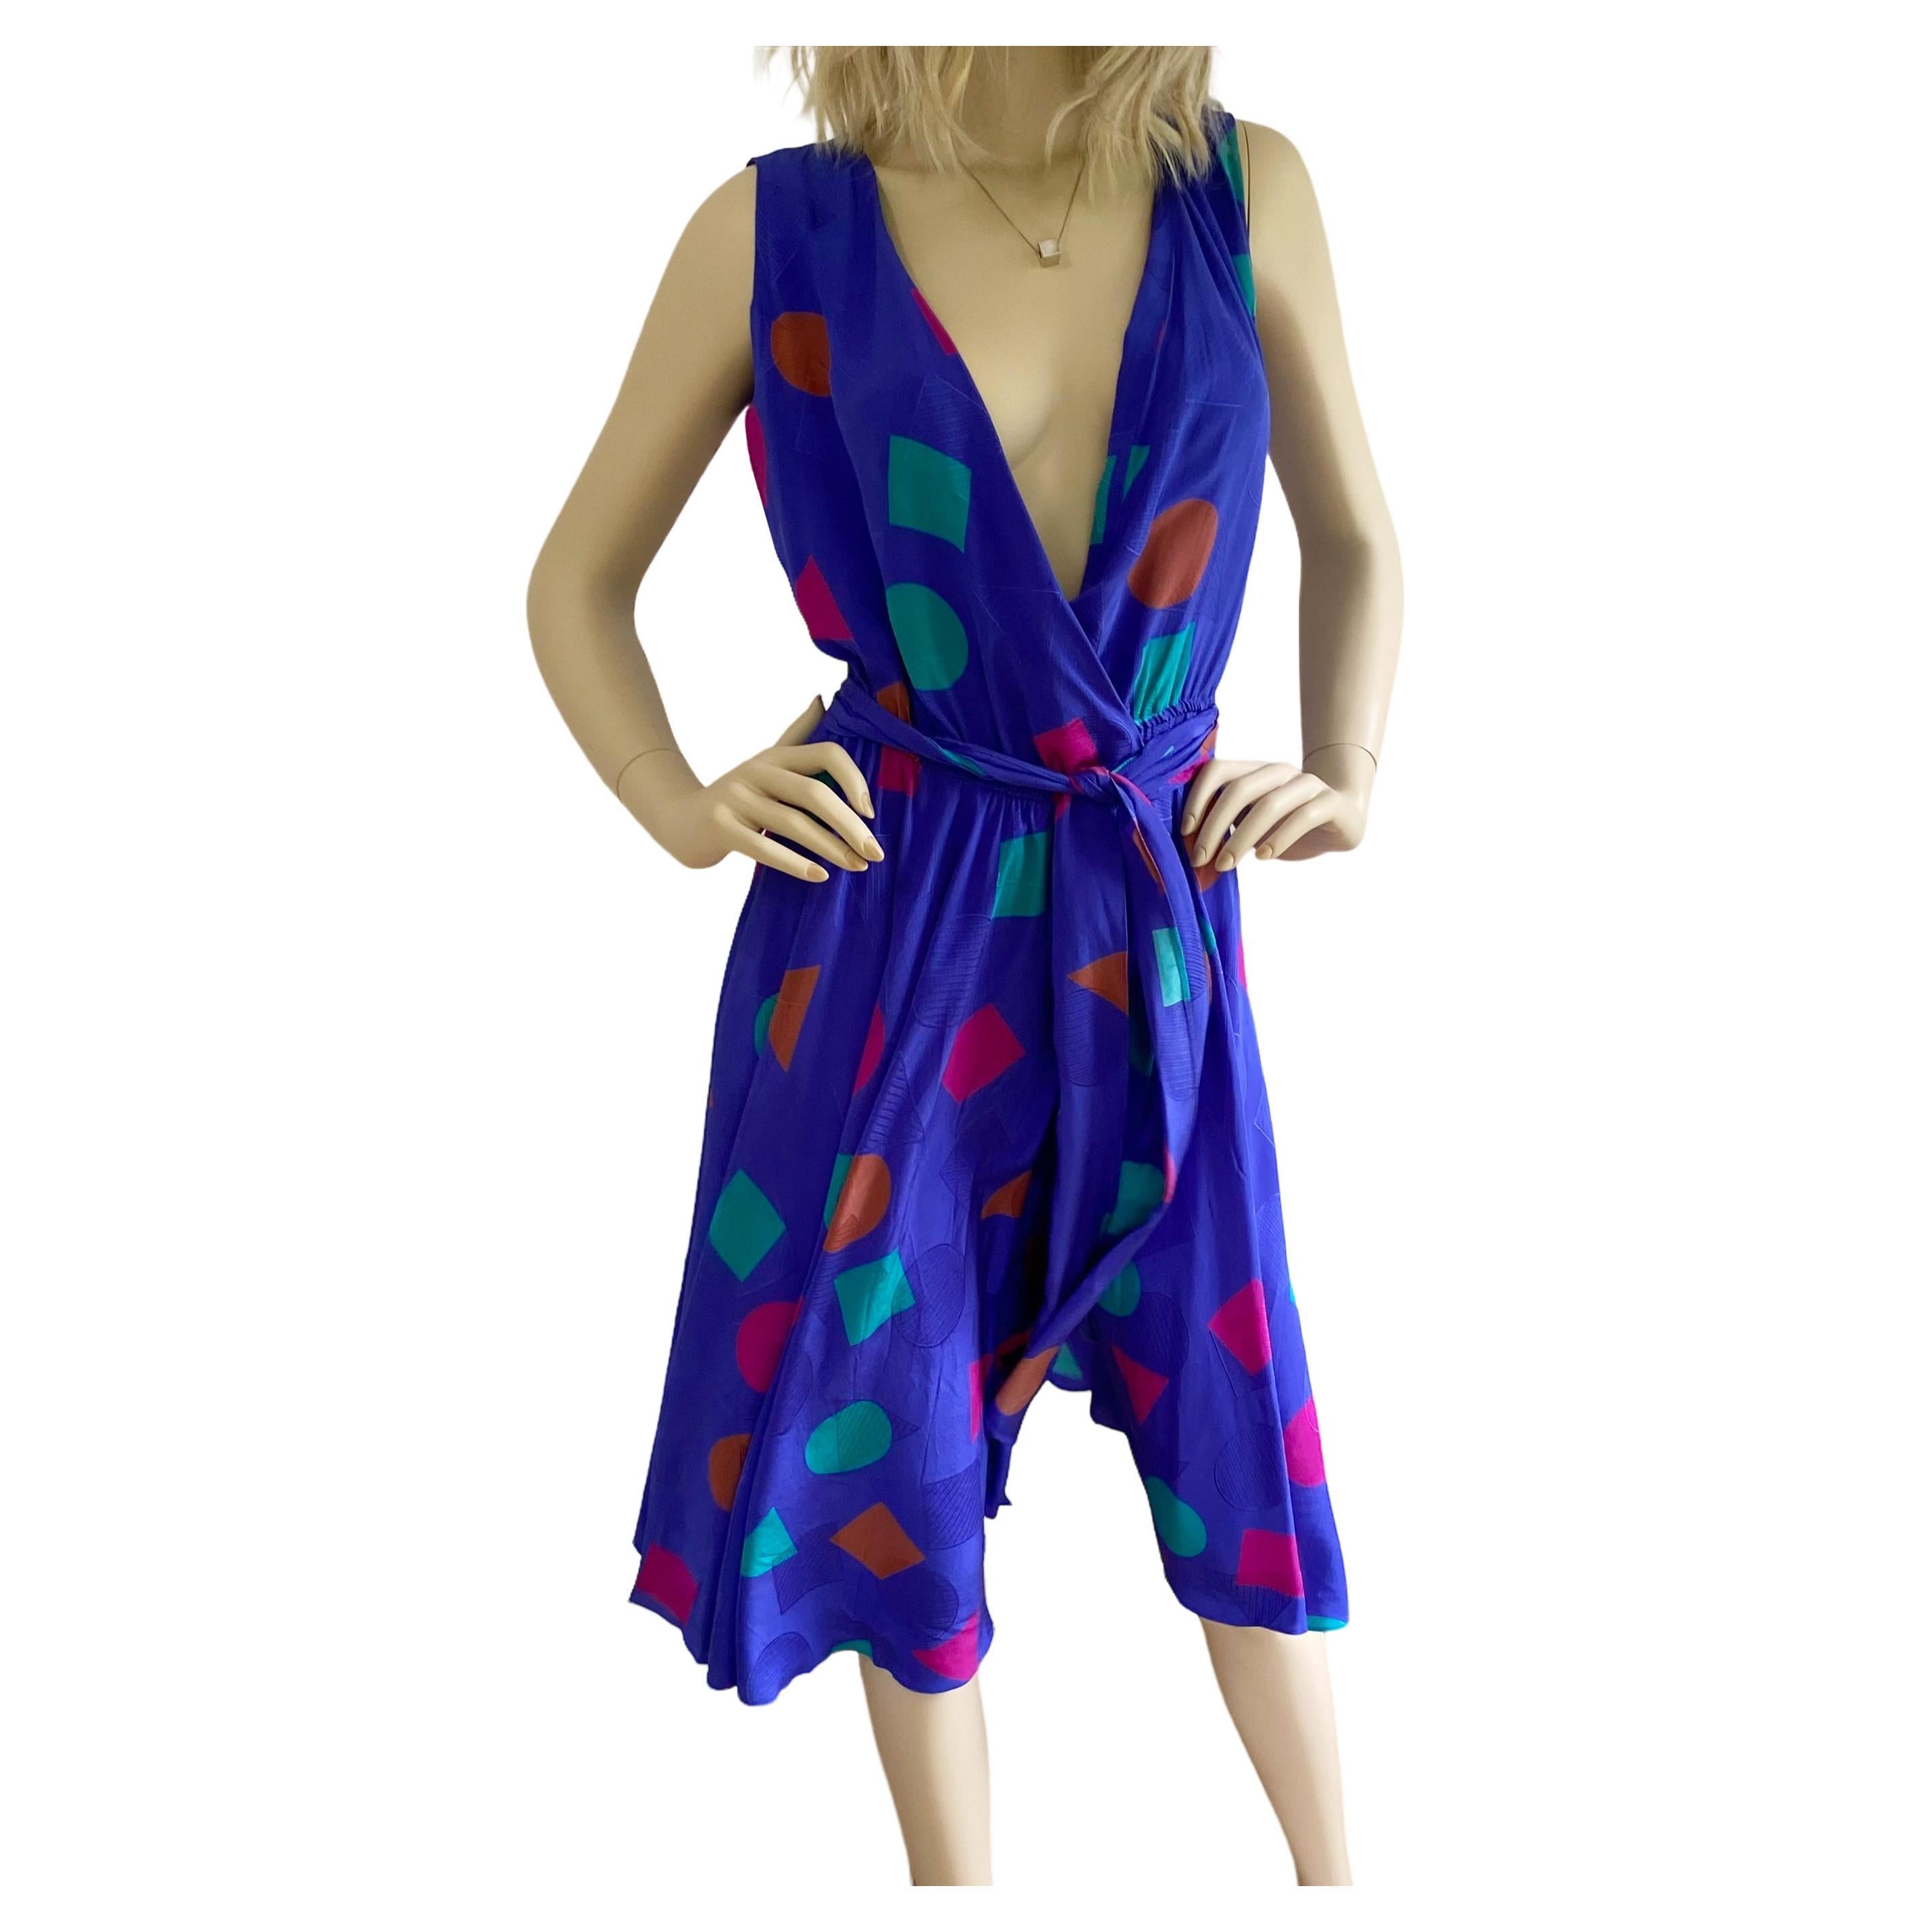 Flora Kung blue silk wrap Selma dress.
Bias-cut skirt.
Elastic waist true wrap. Easy fit.
Original print on Flora's original geo silk jacquard. 
Size 4
17